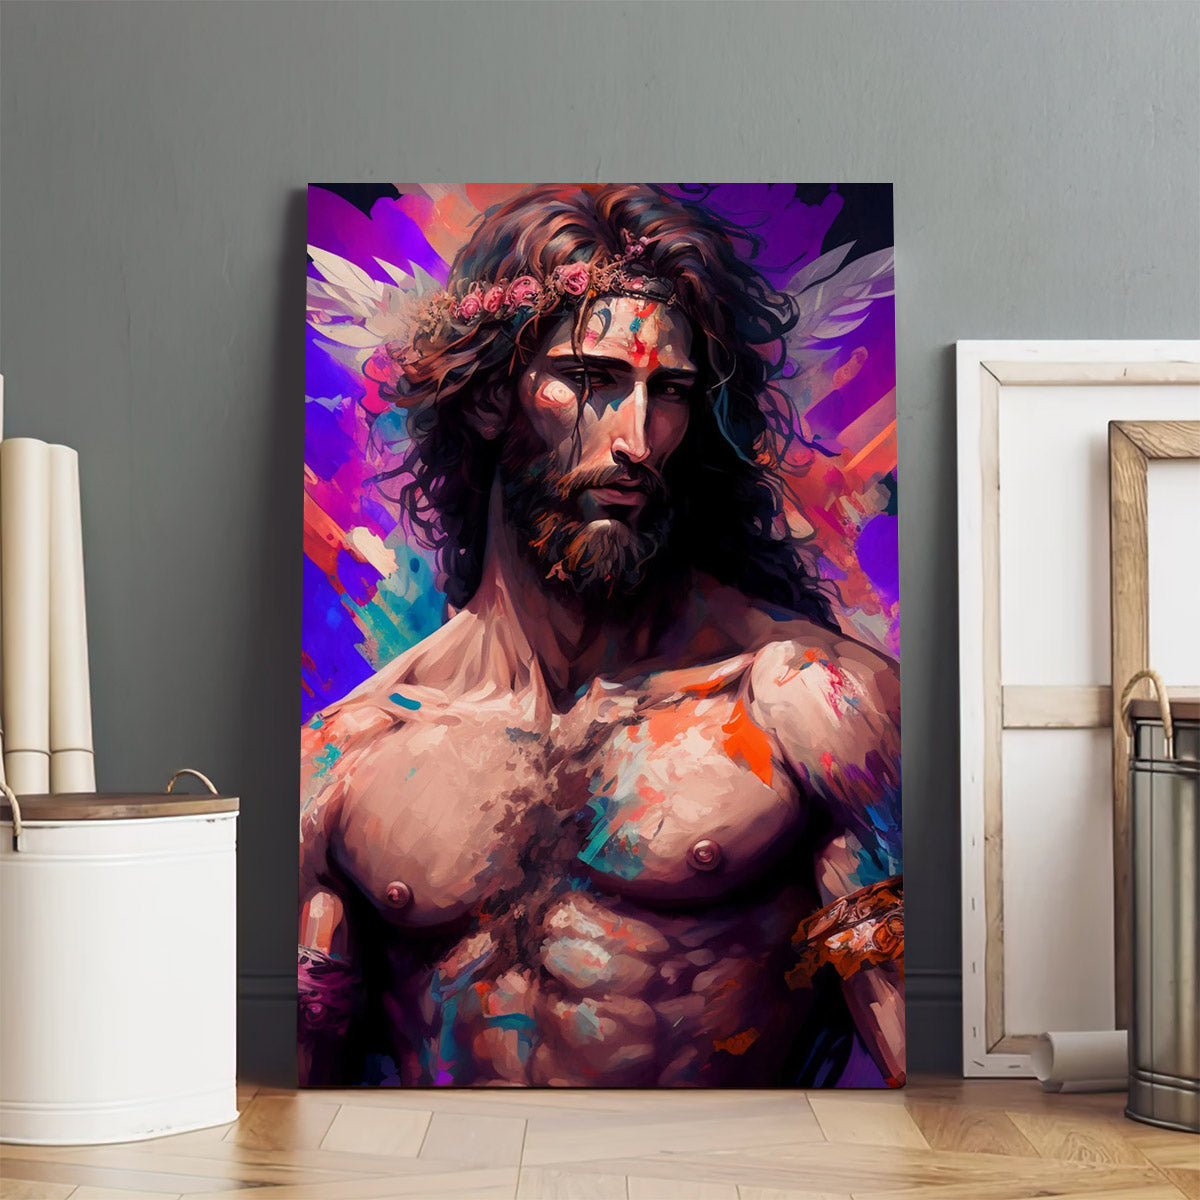 The Son Of God Portrait Of Jesus Christ - Jesus Canvas Art - Christian Wall Art